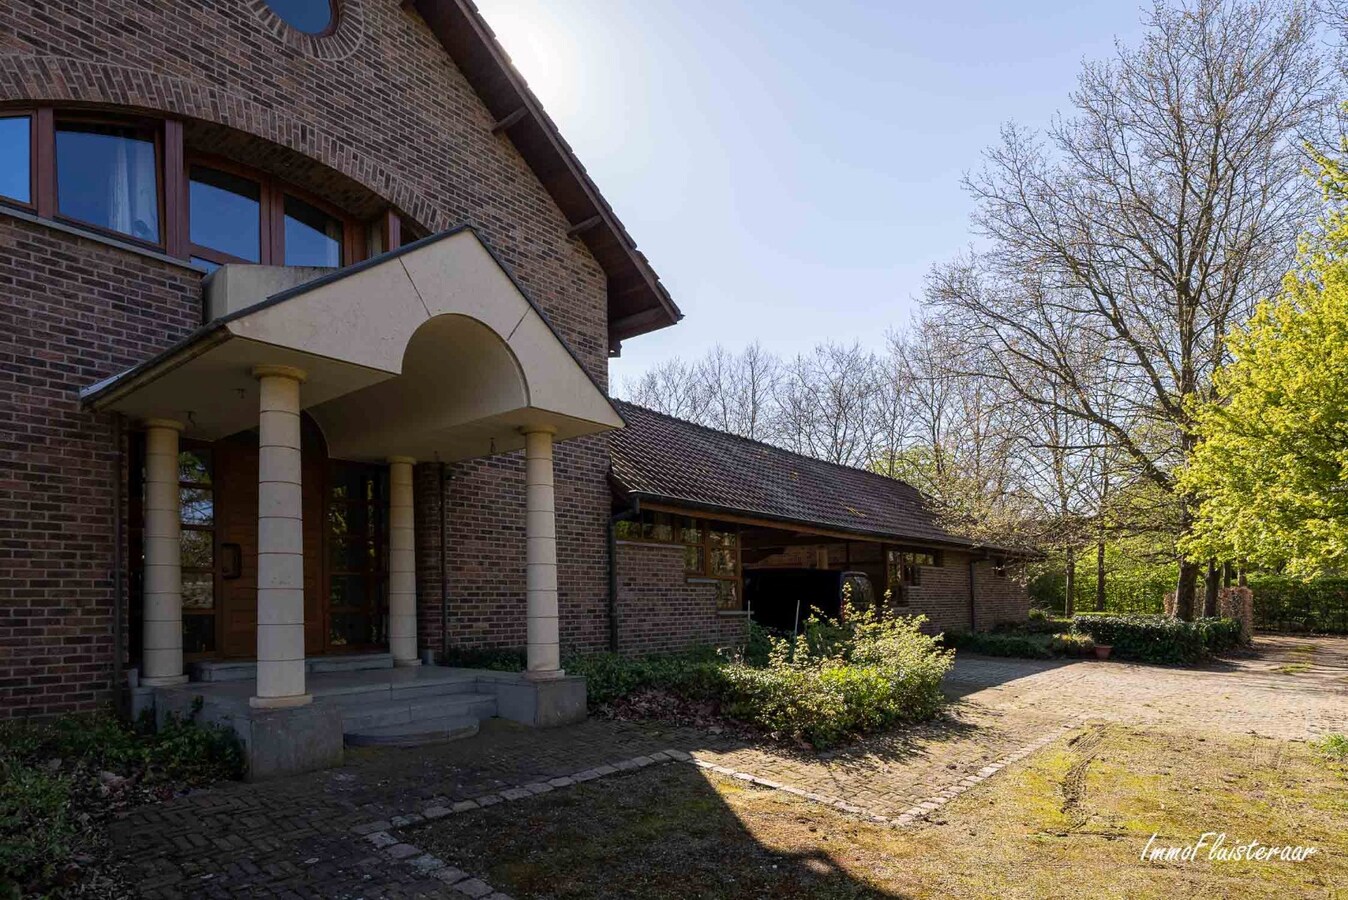 Property for sale in Aarschot